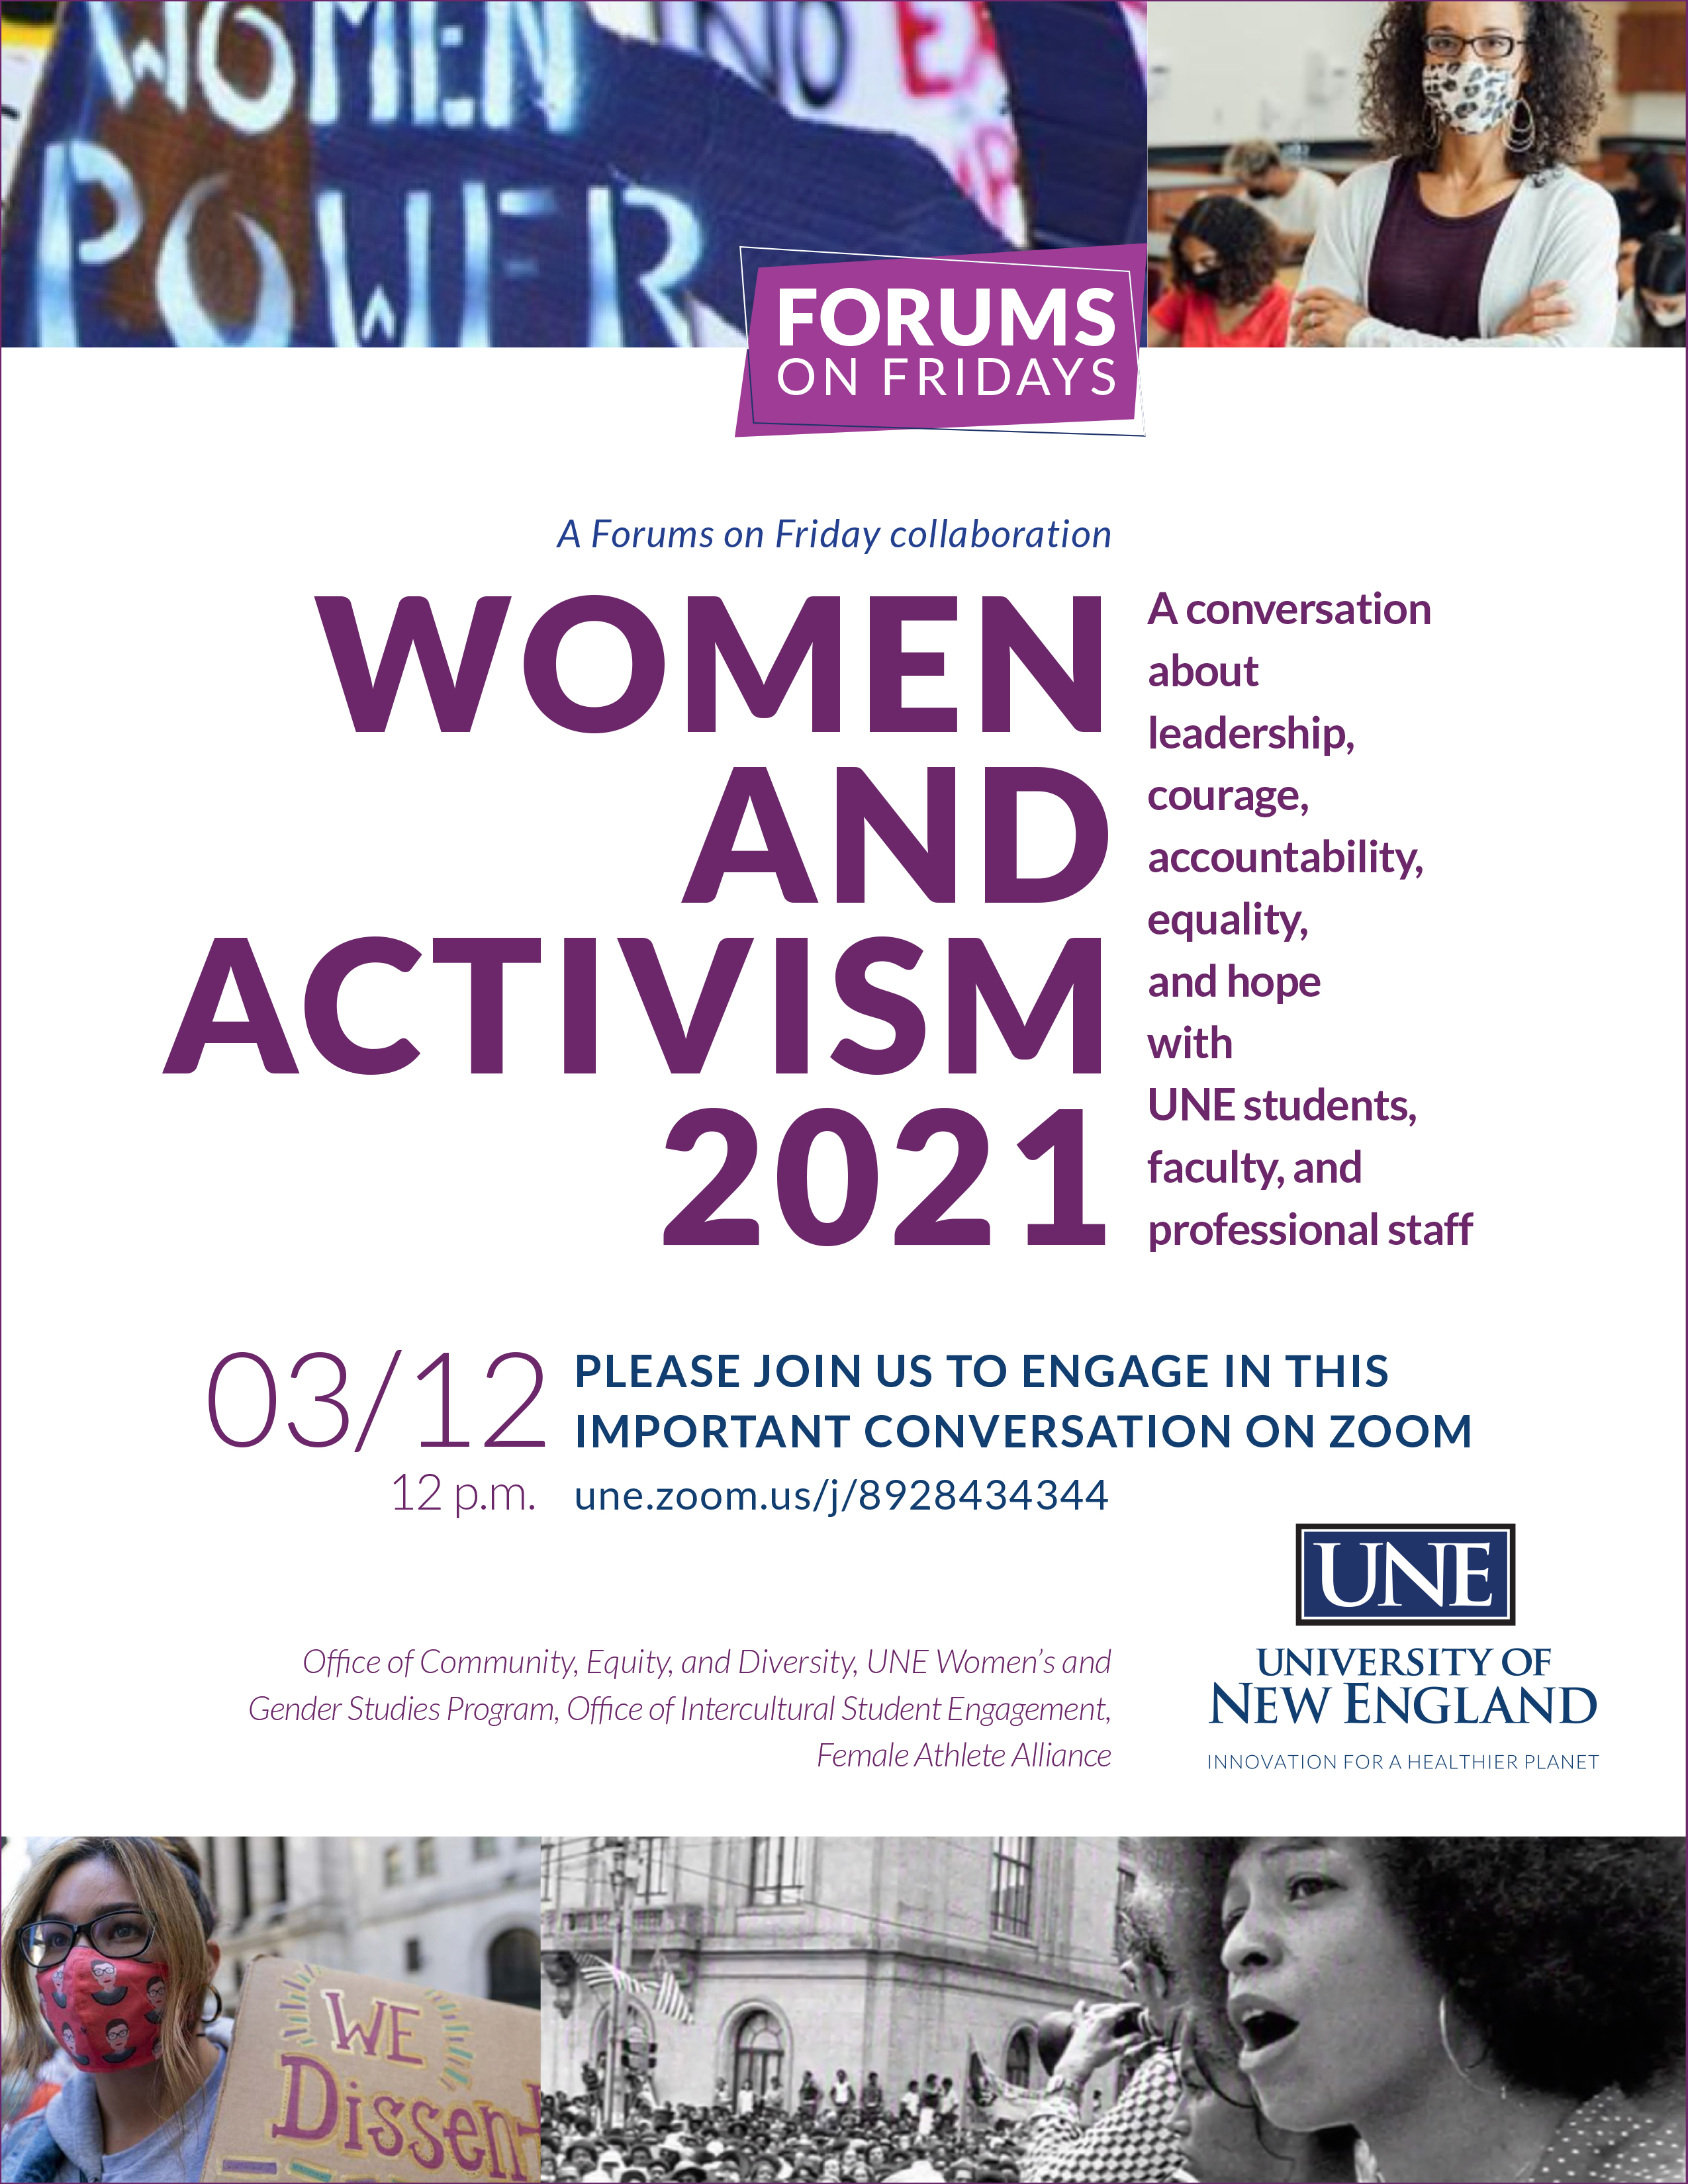 Women and Activism event flyer